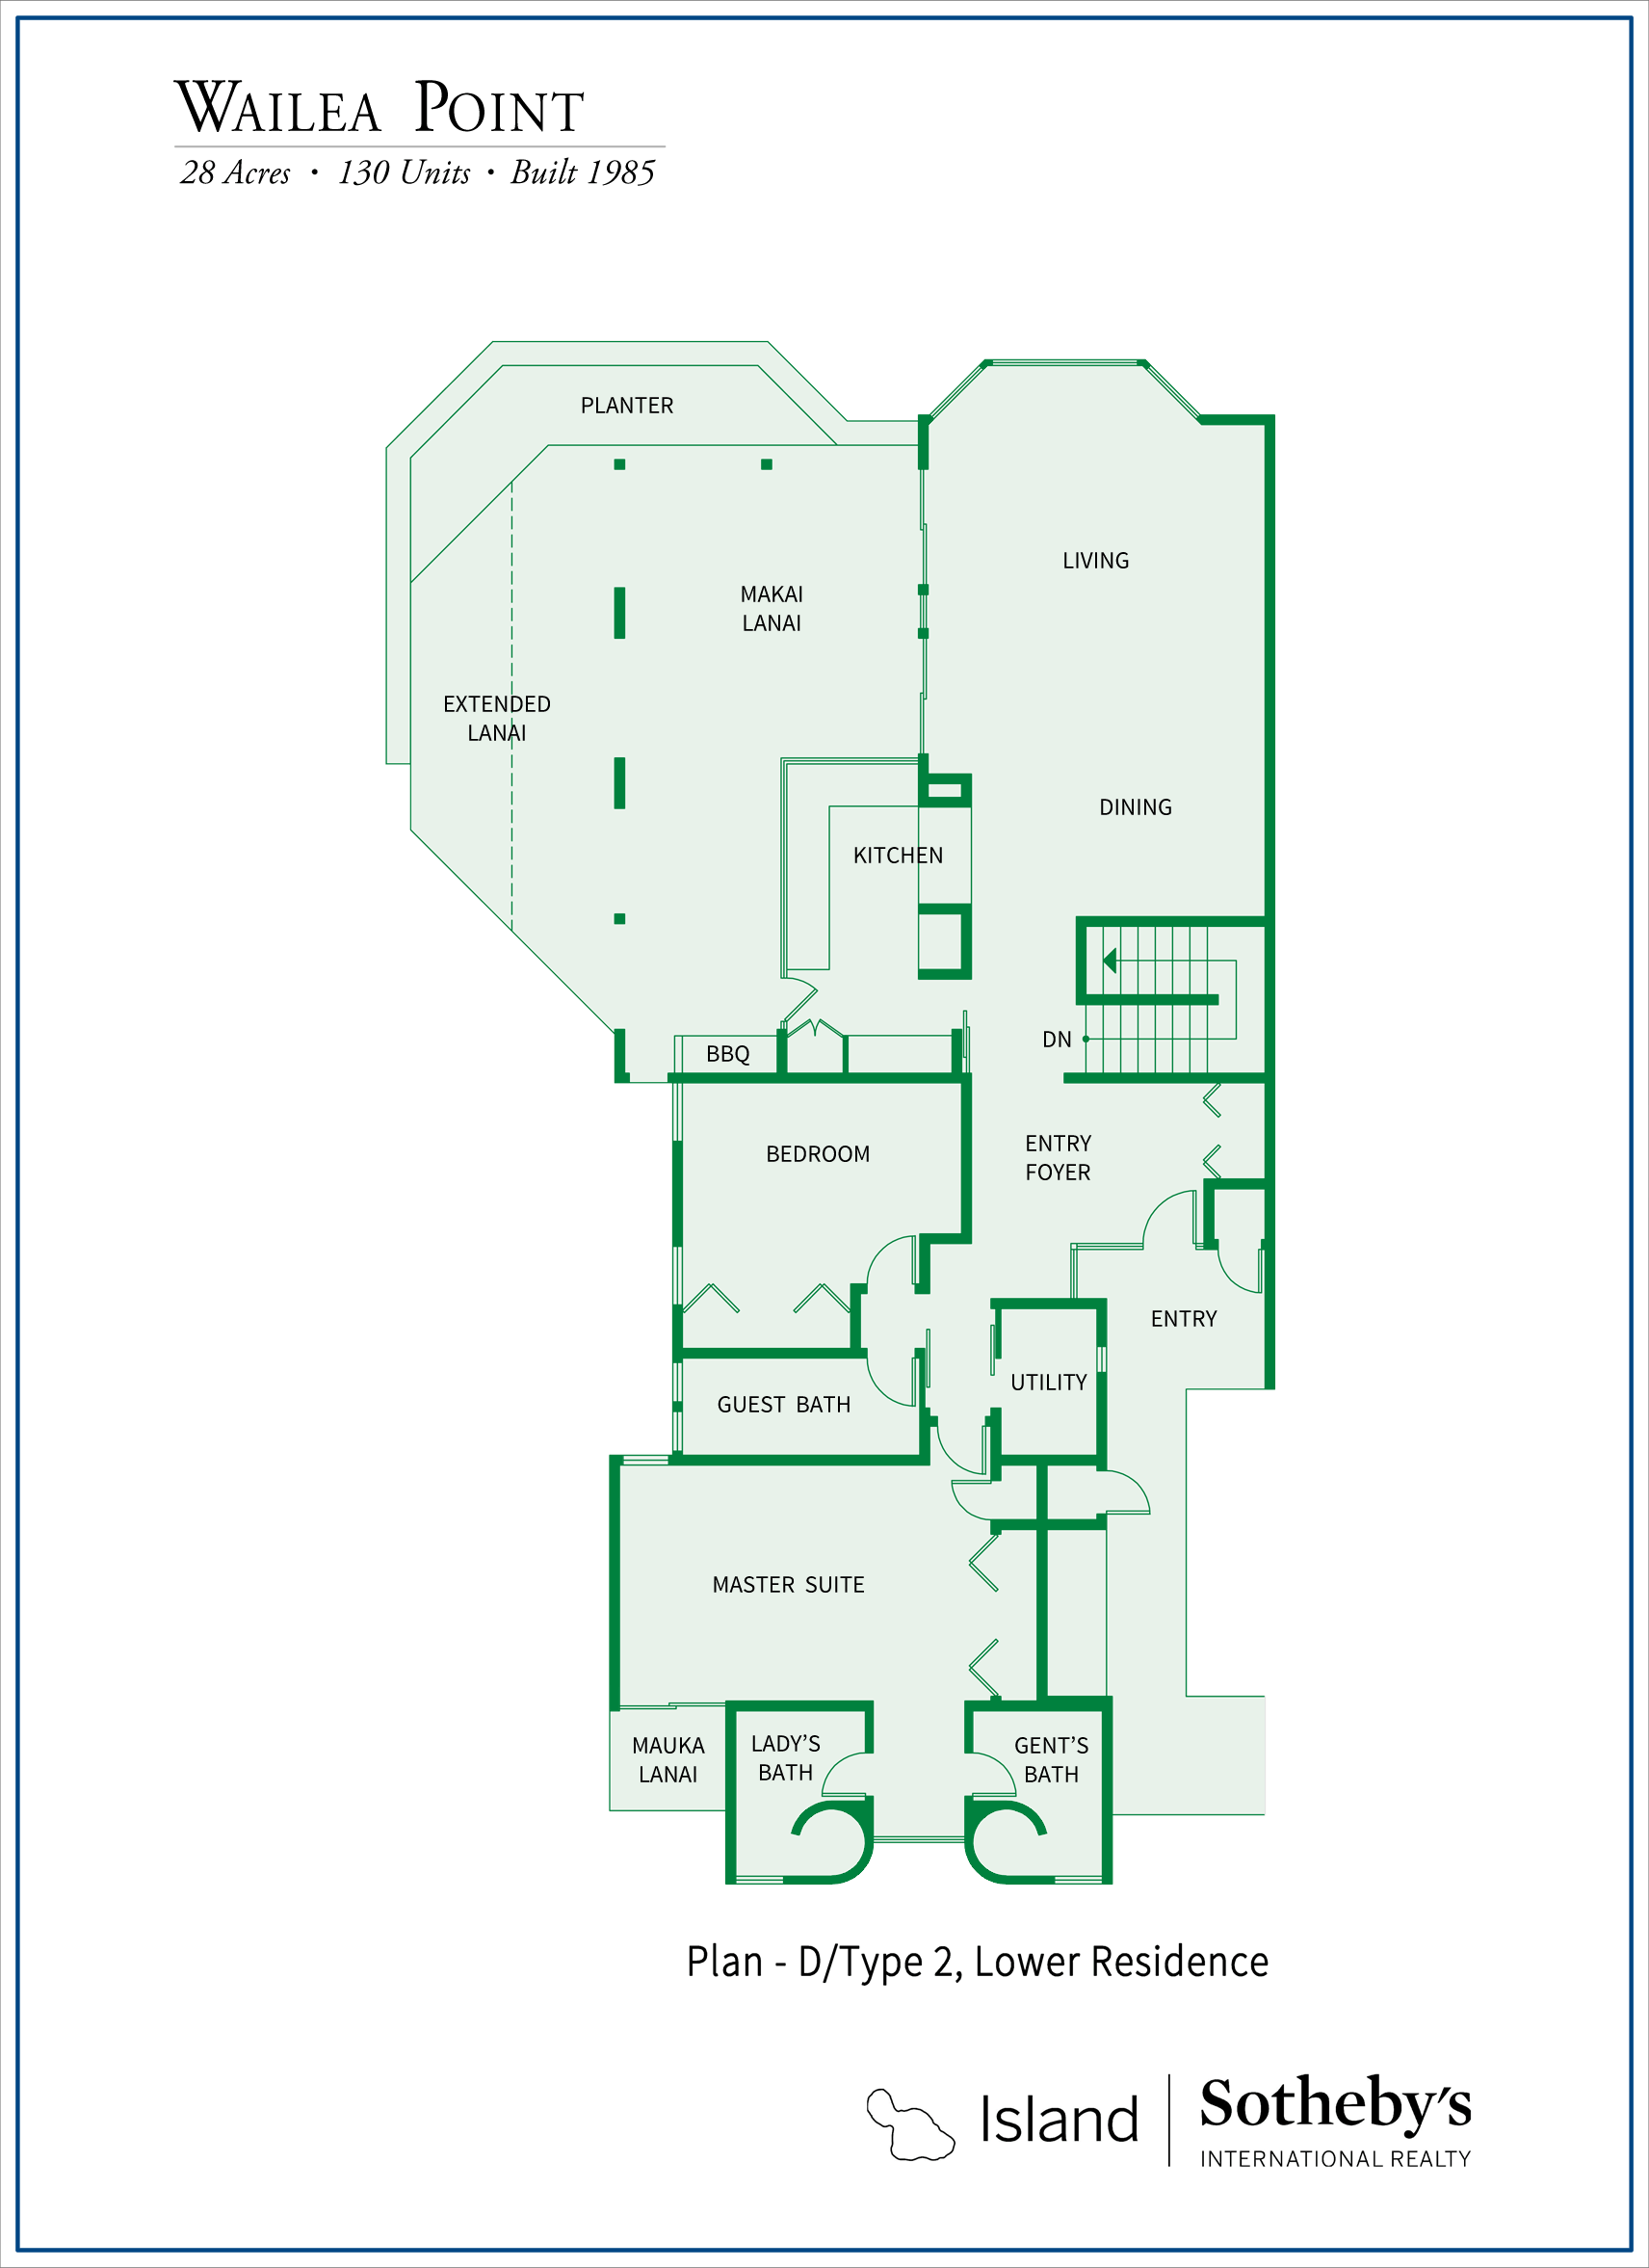 Wailea Point Floor Plan D2 Ground Level